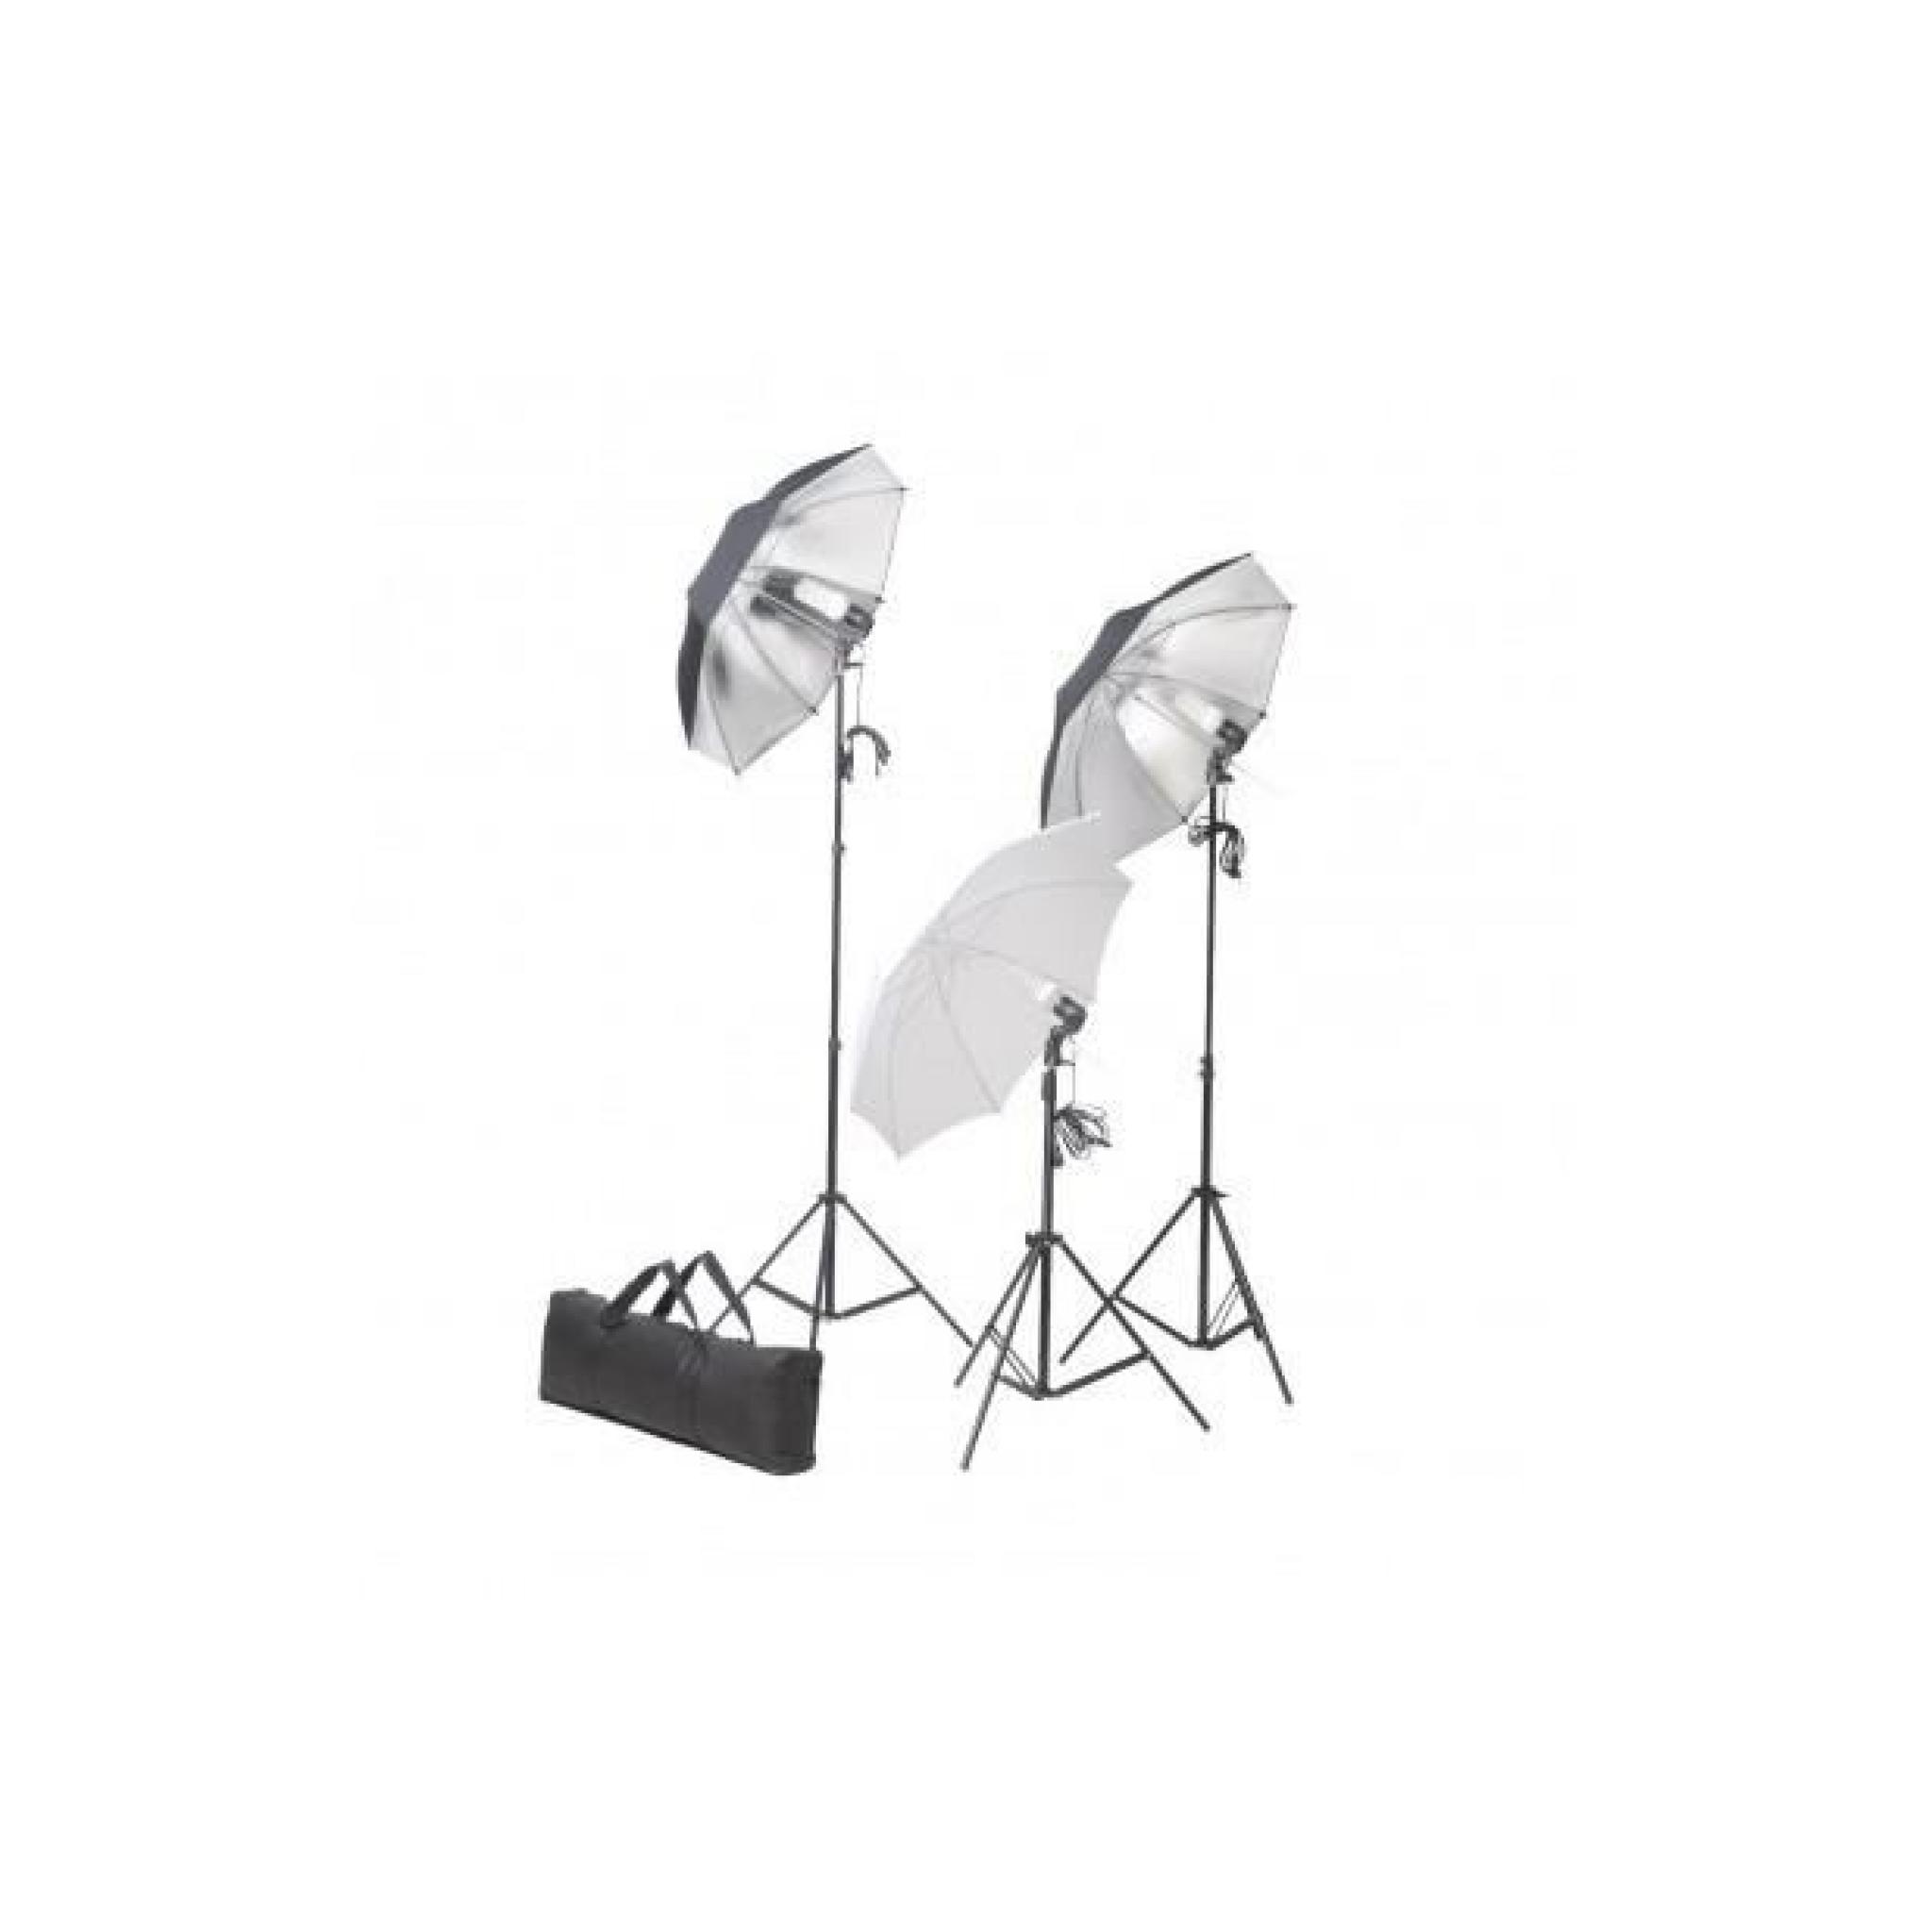 Superbe Kit studio 3 lampes daylight & accessoires  pas cher